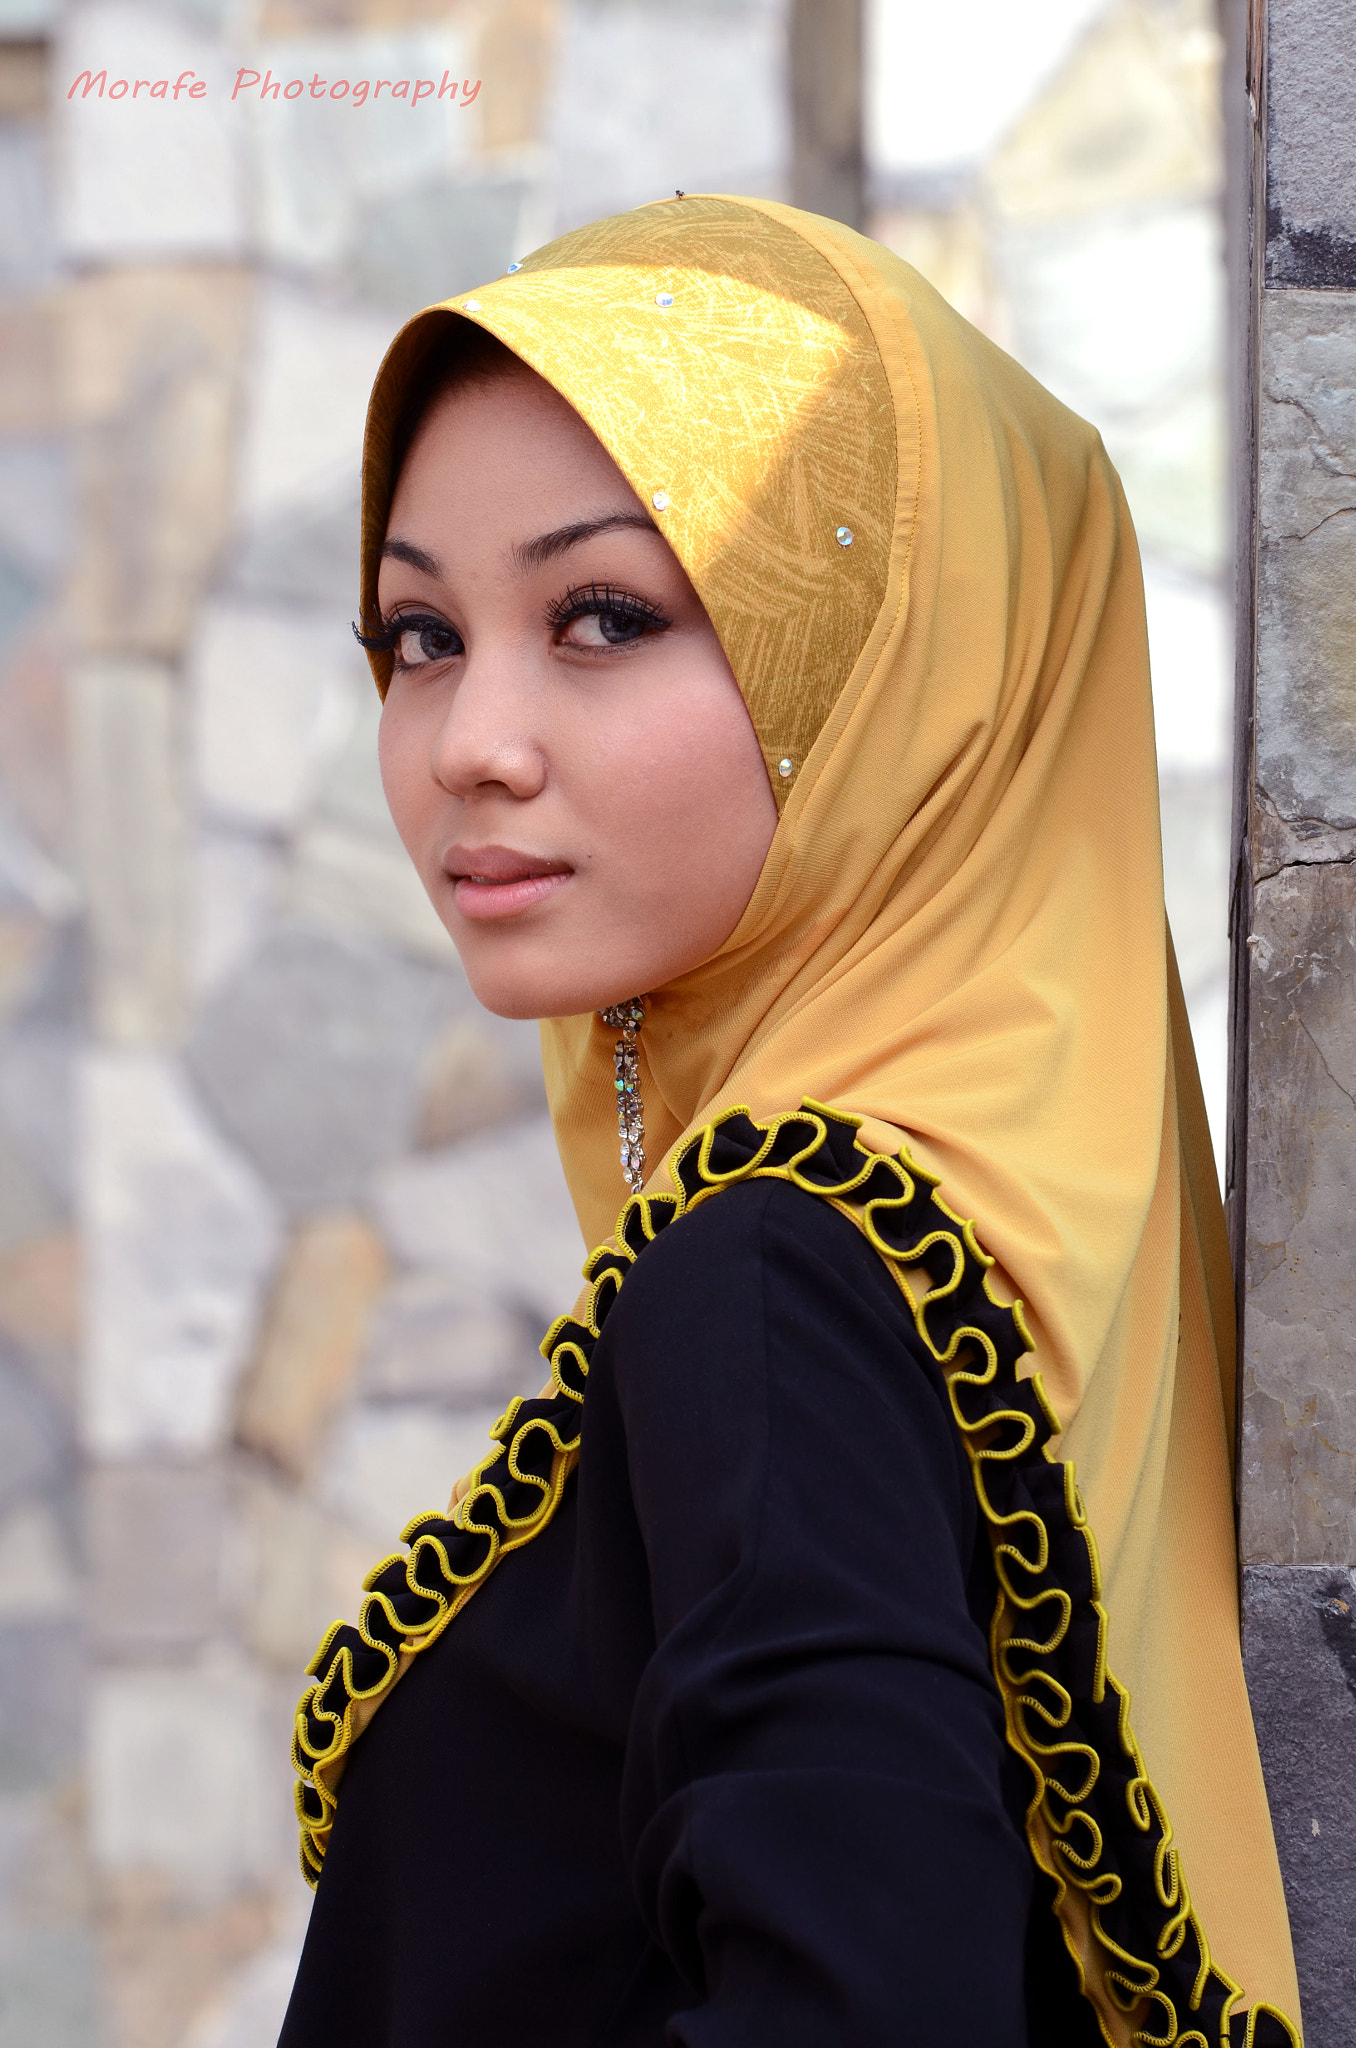 Download Hijab Model by Morafe - Photo 30489217 / 500px